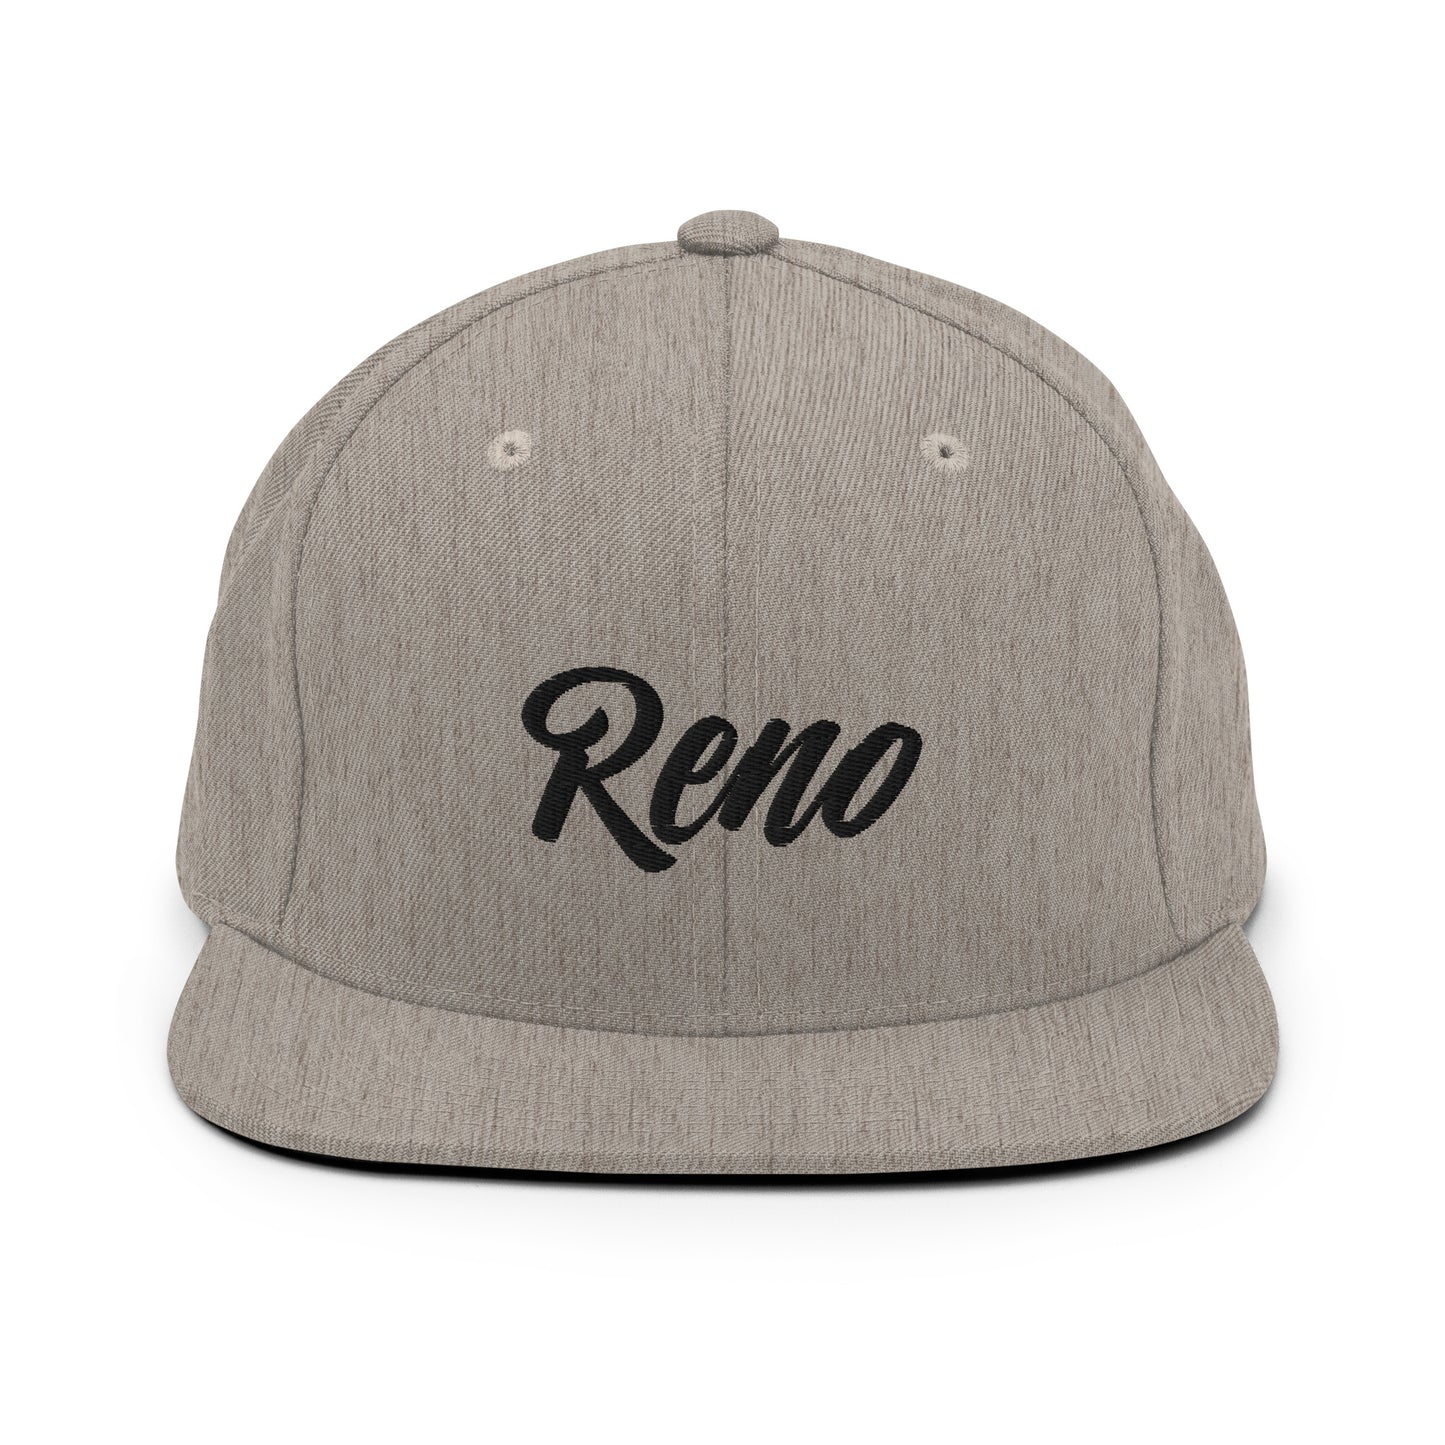 Reno Snapback Hat 11